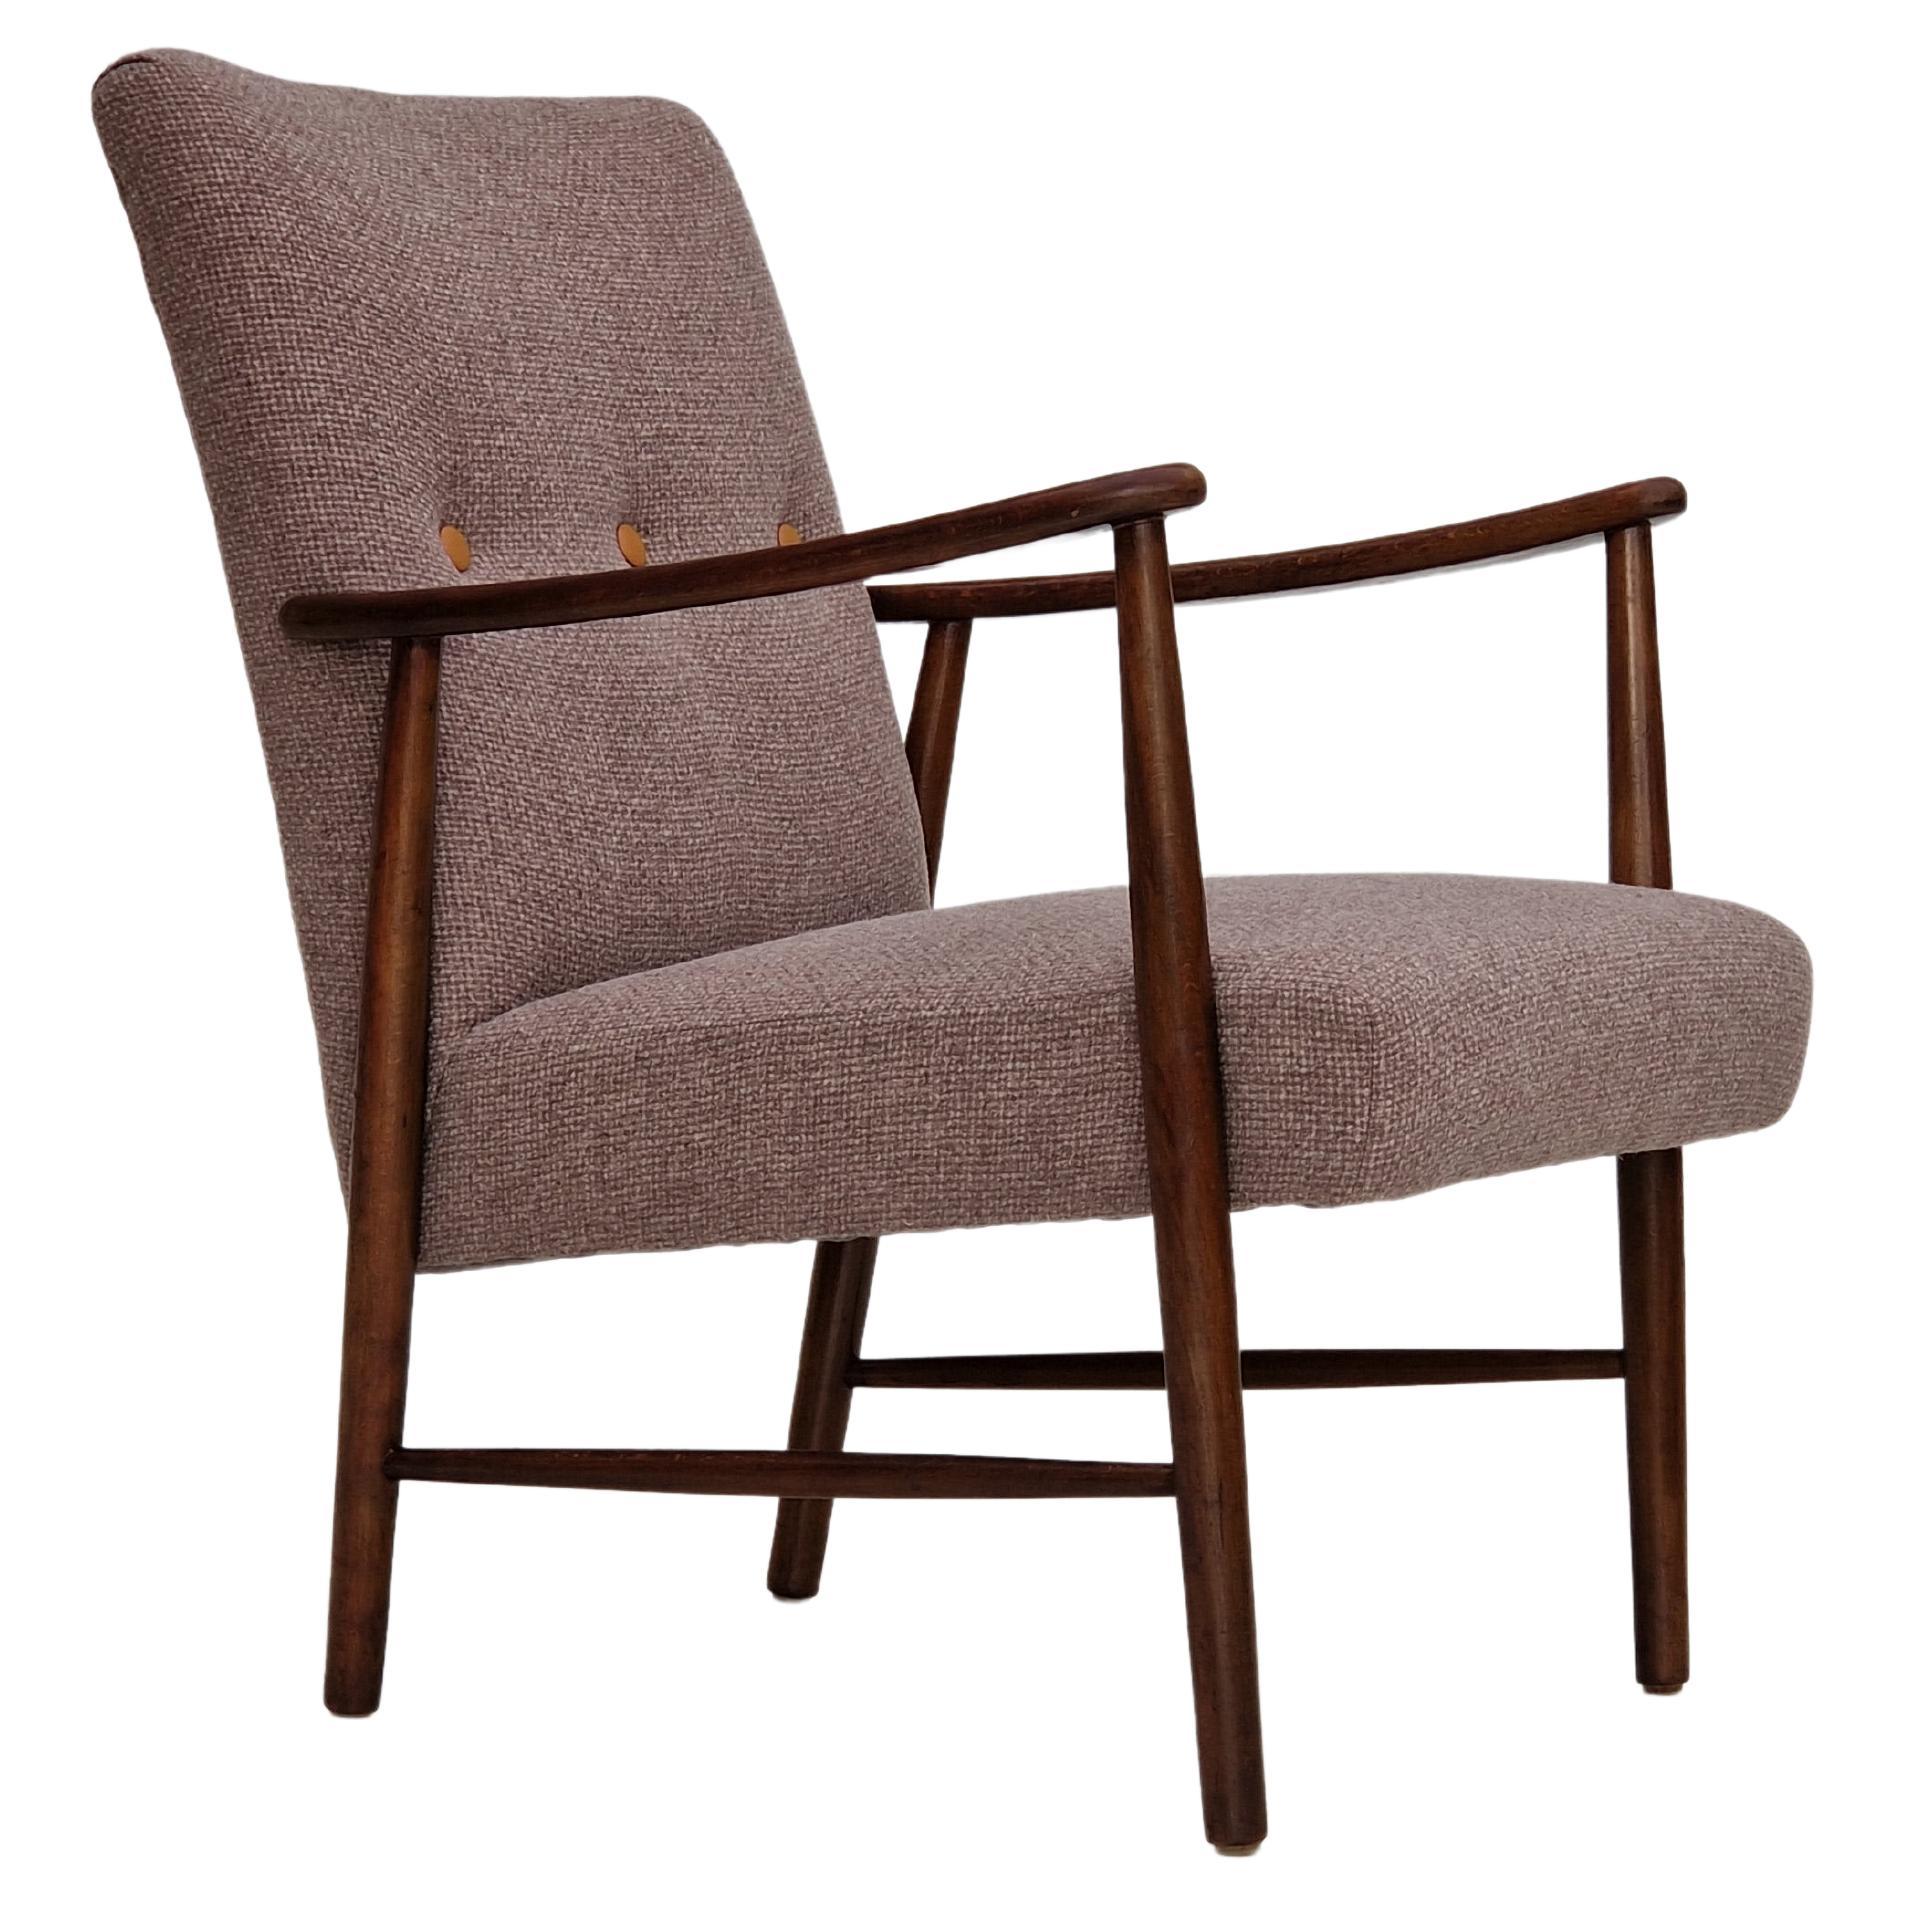 1960s, Swedish Design, Refurbished Armchair, Furniture Wool